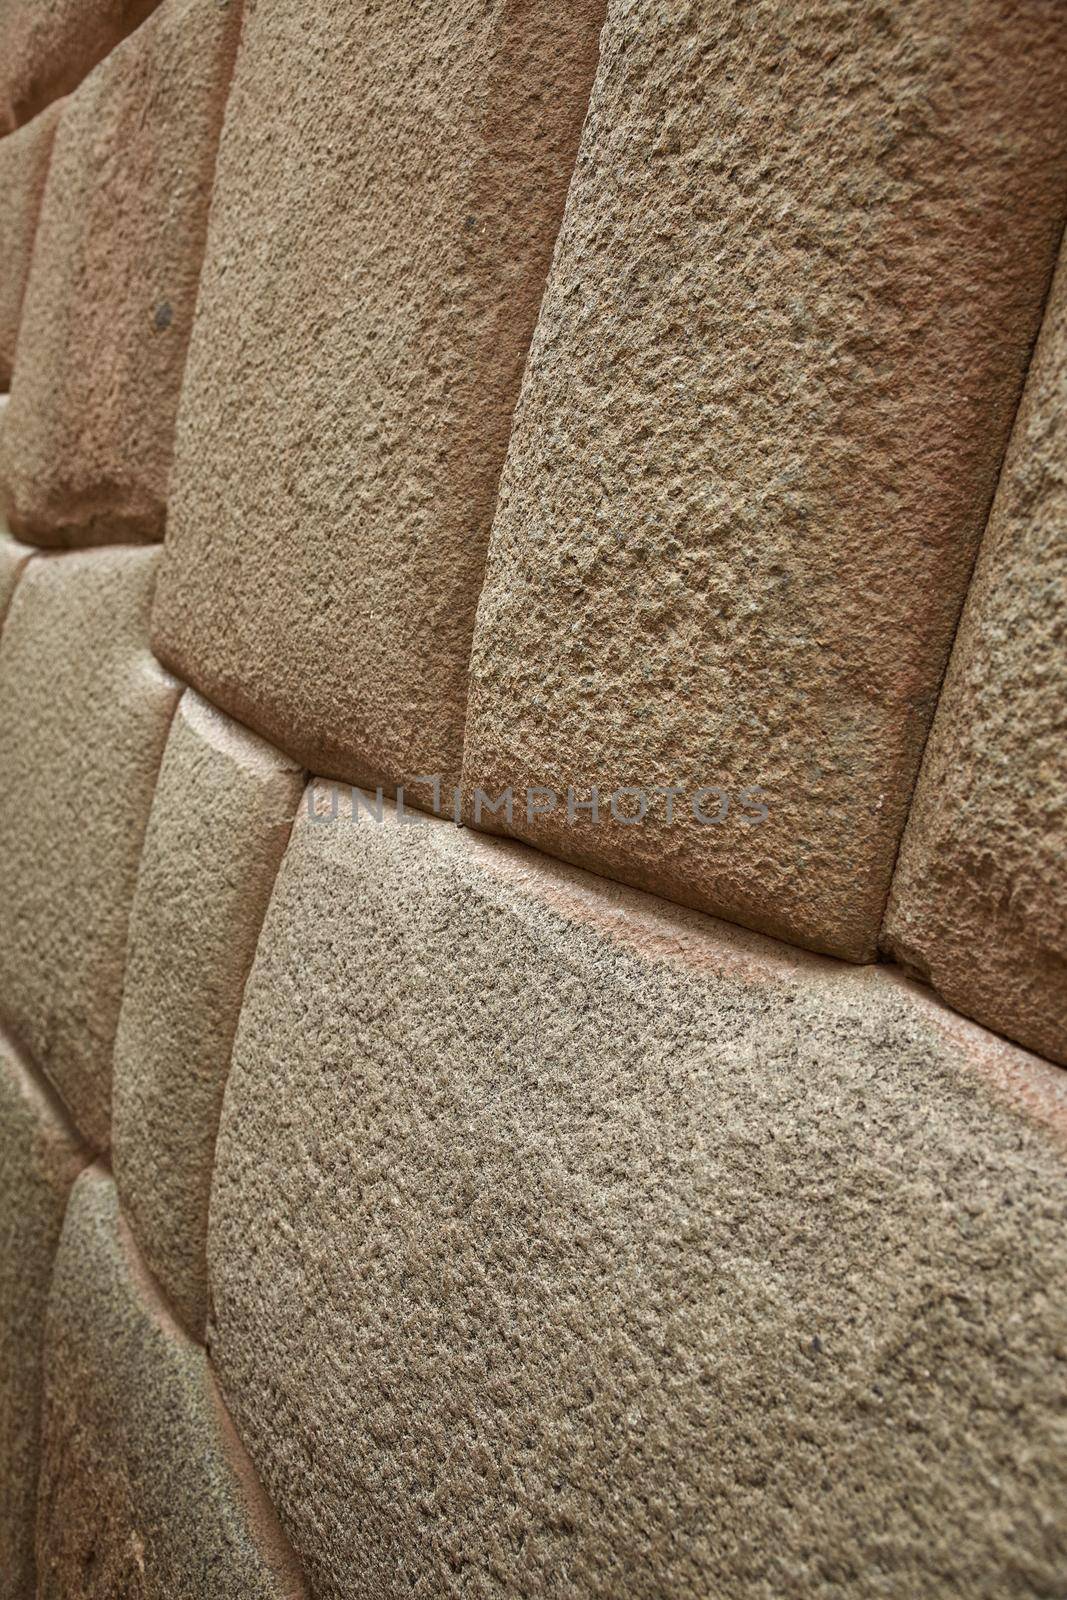 Detail of Inca wall in city of Cusco in Peru